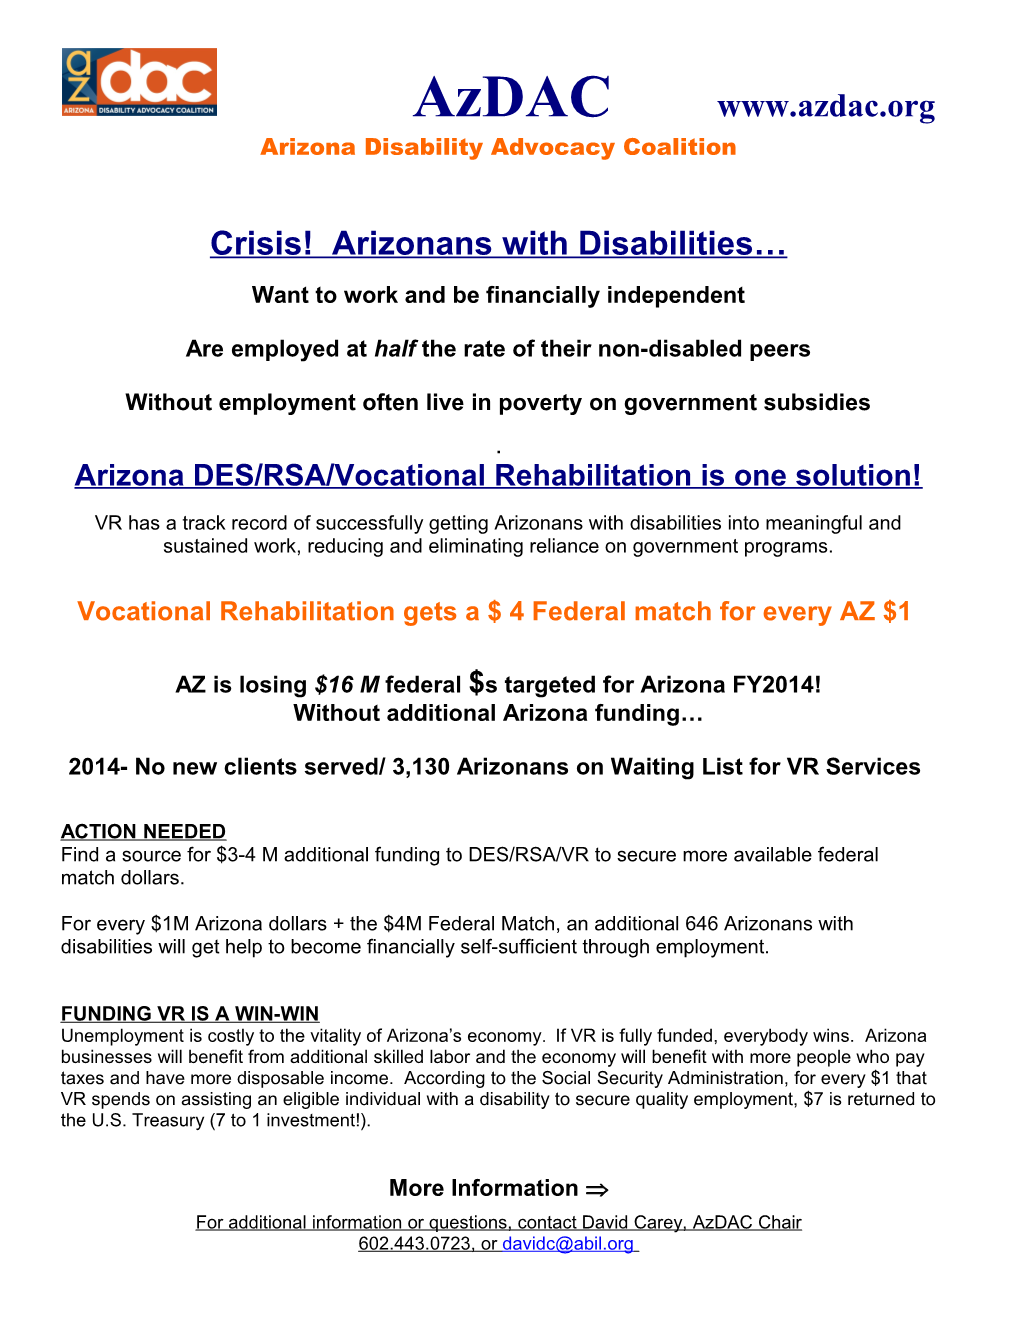 Vocational Rehab Program Fact Sheet